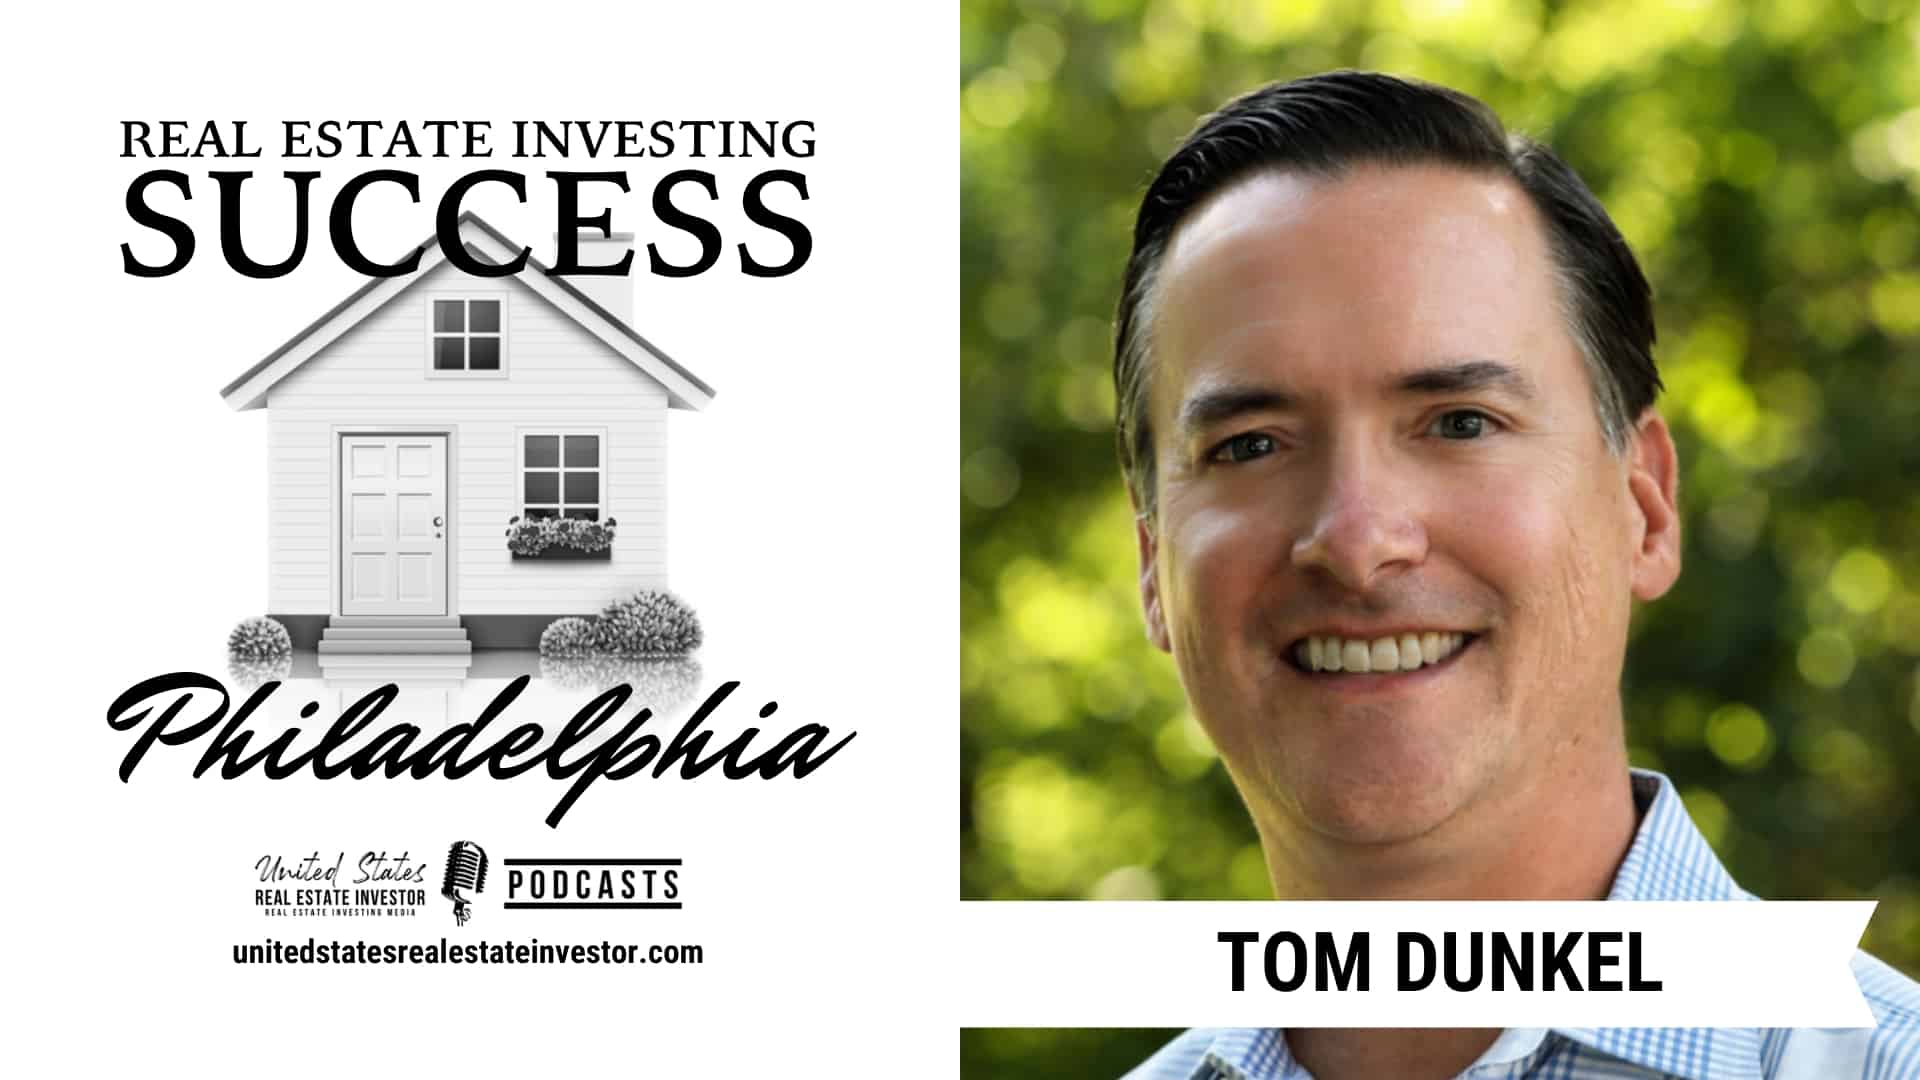 Real Estate Investing Success Philadelphia with Tom Dunkel